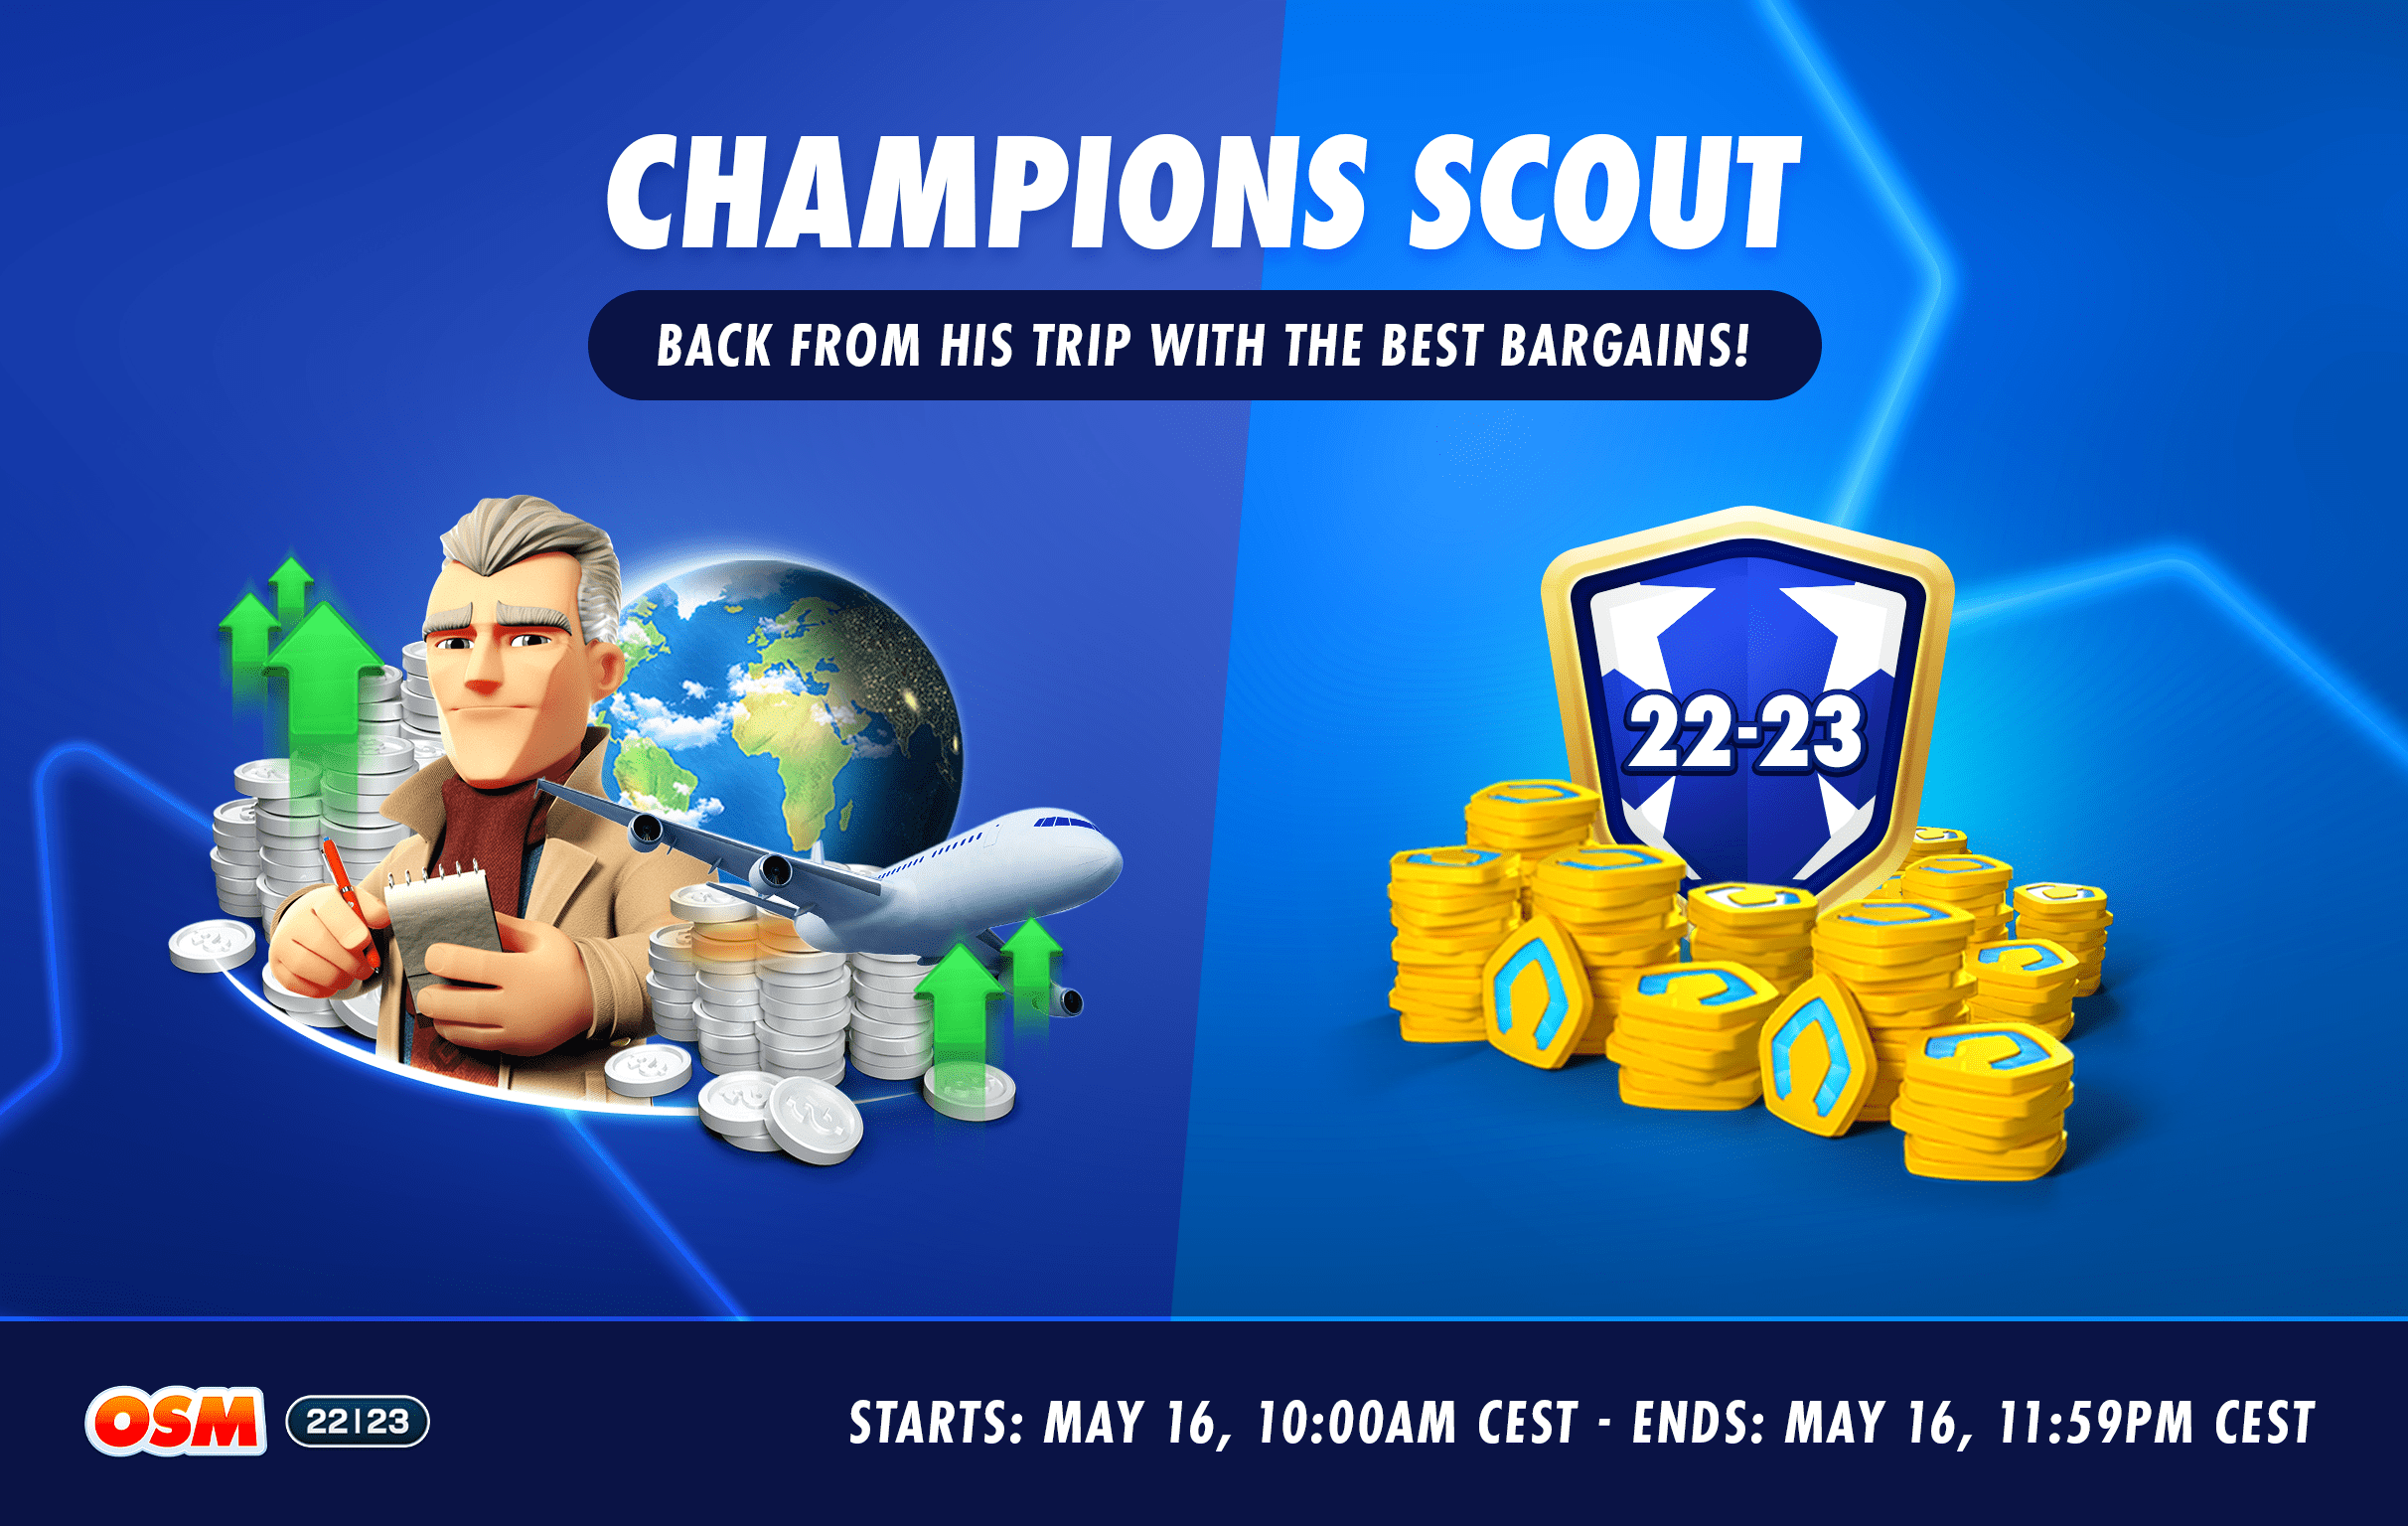 2023-05-16 Bargain Champions Scout x CL Promo-min.png